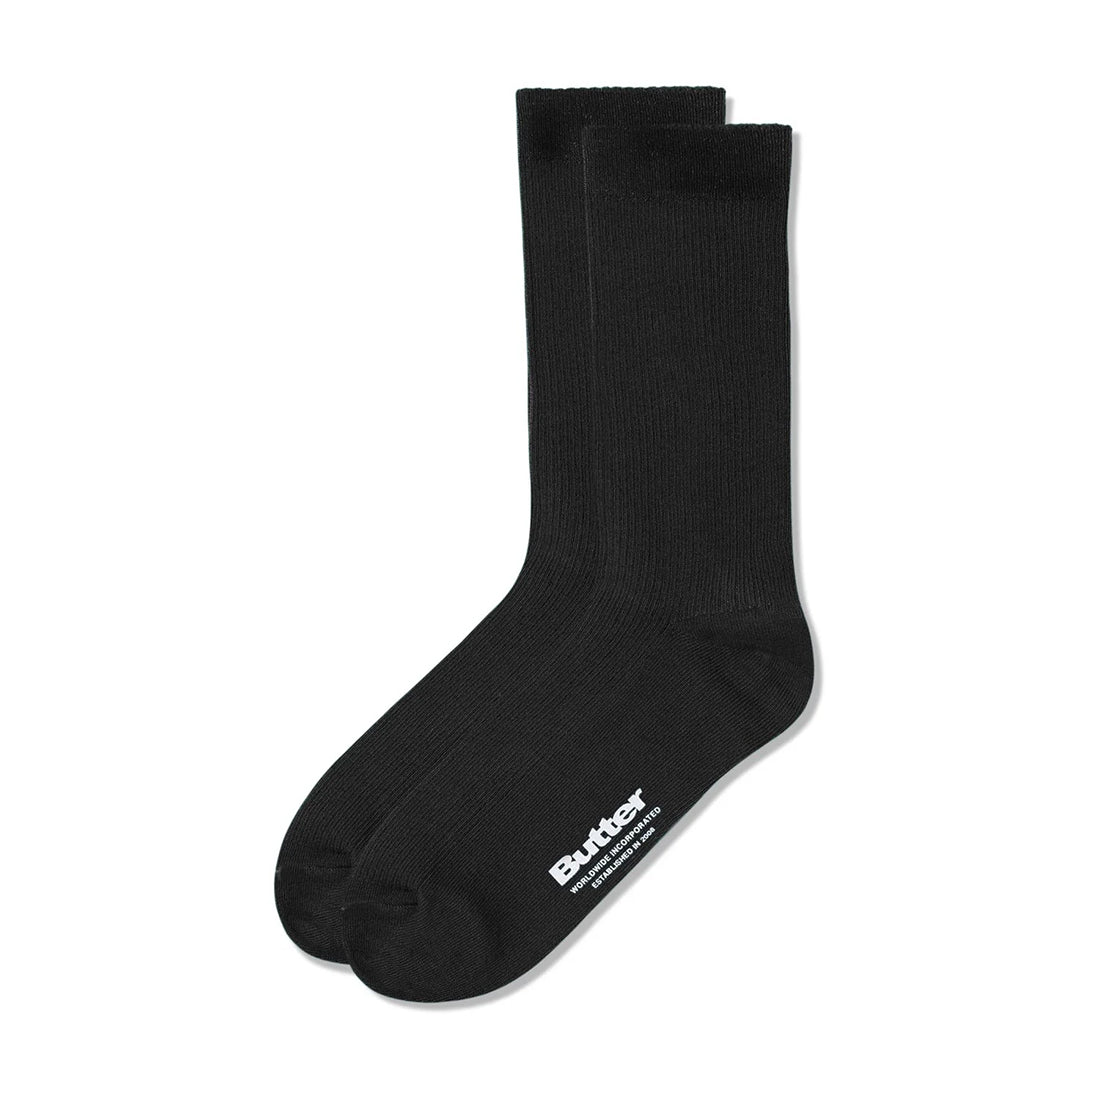 Pigment Dye Socks - Washed Black